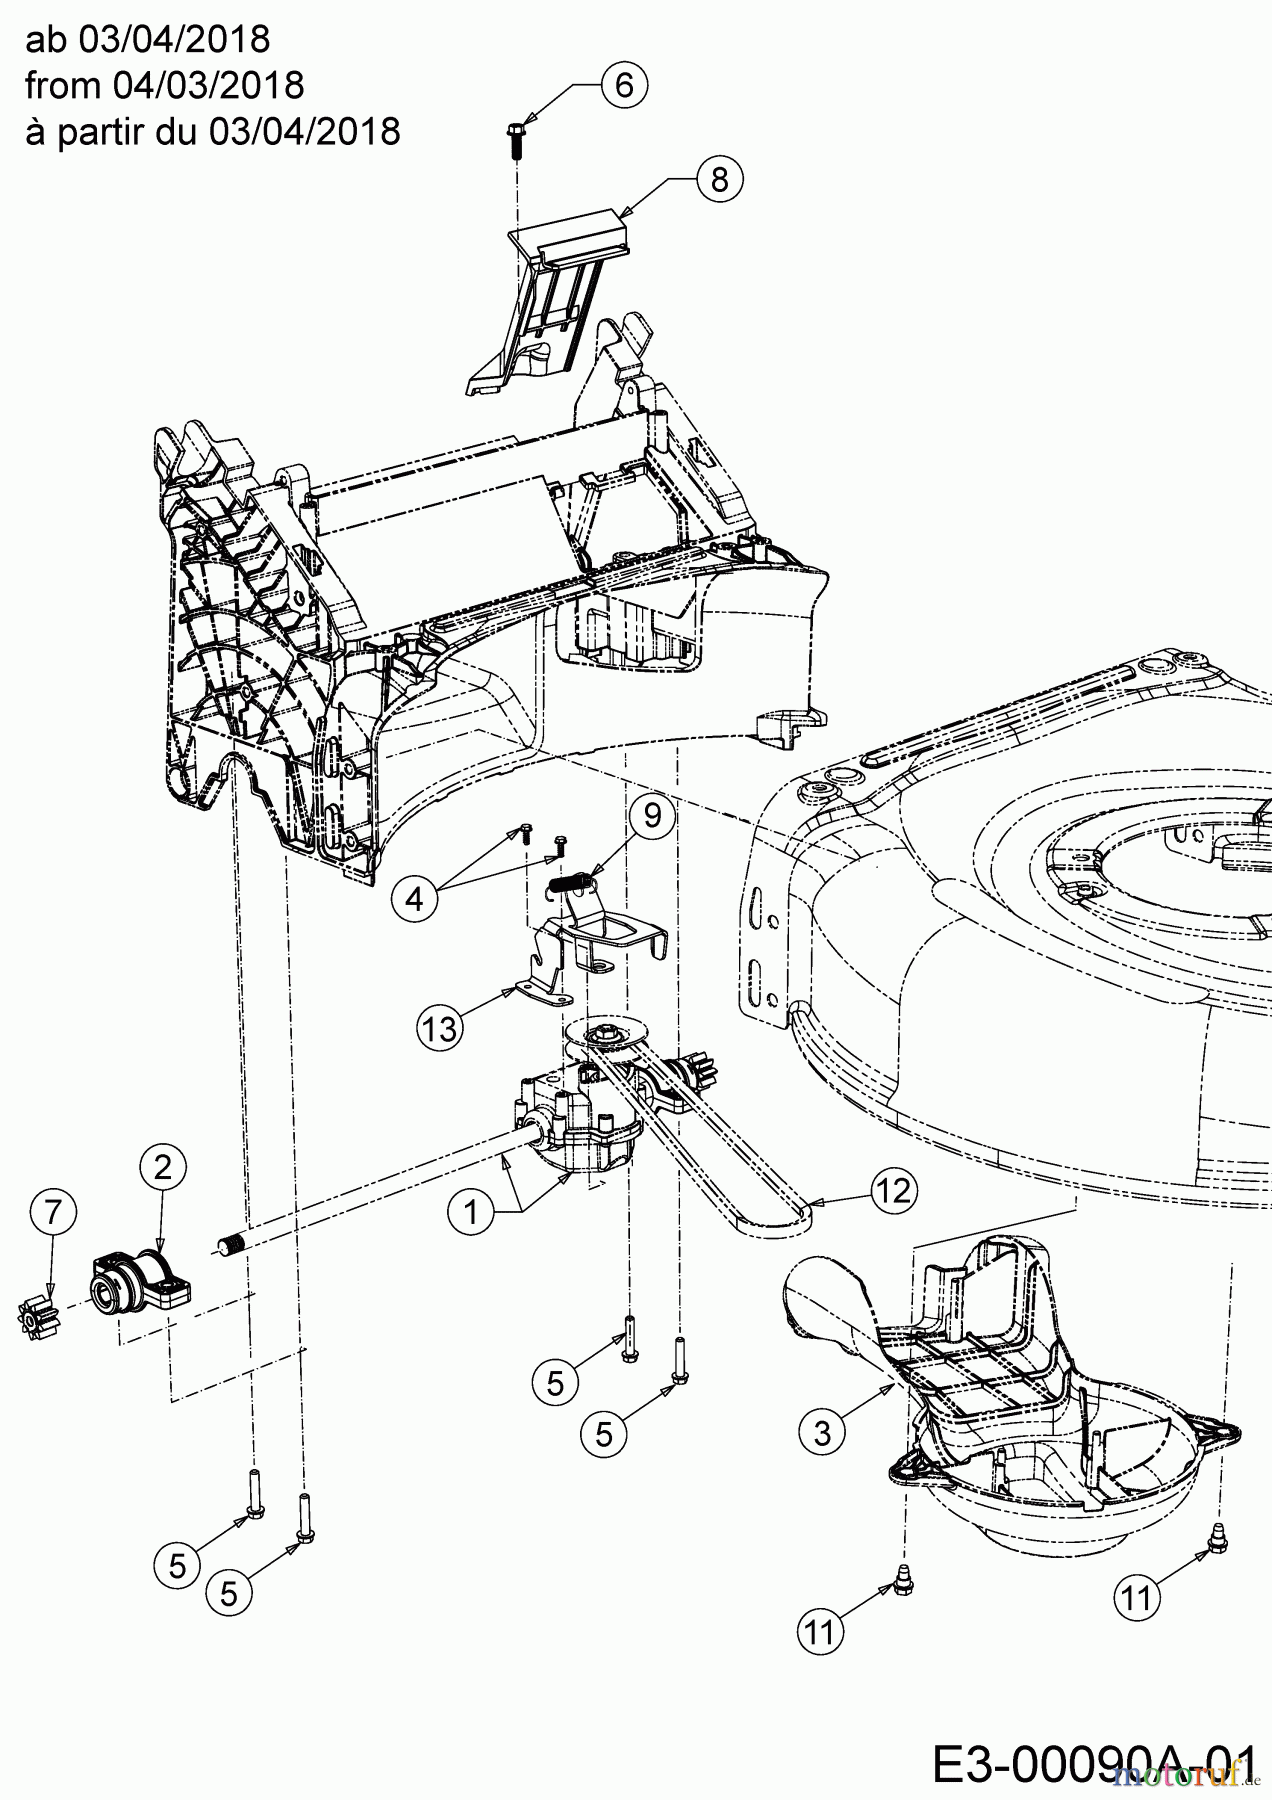  Cub Cadet Motormäher mit Antrieb LM2 DR53 12C-PRKC603  (2018) Getriebe, Keilriemen ab 03/04/2018